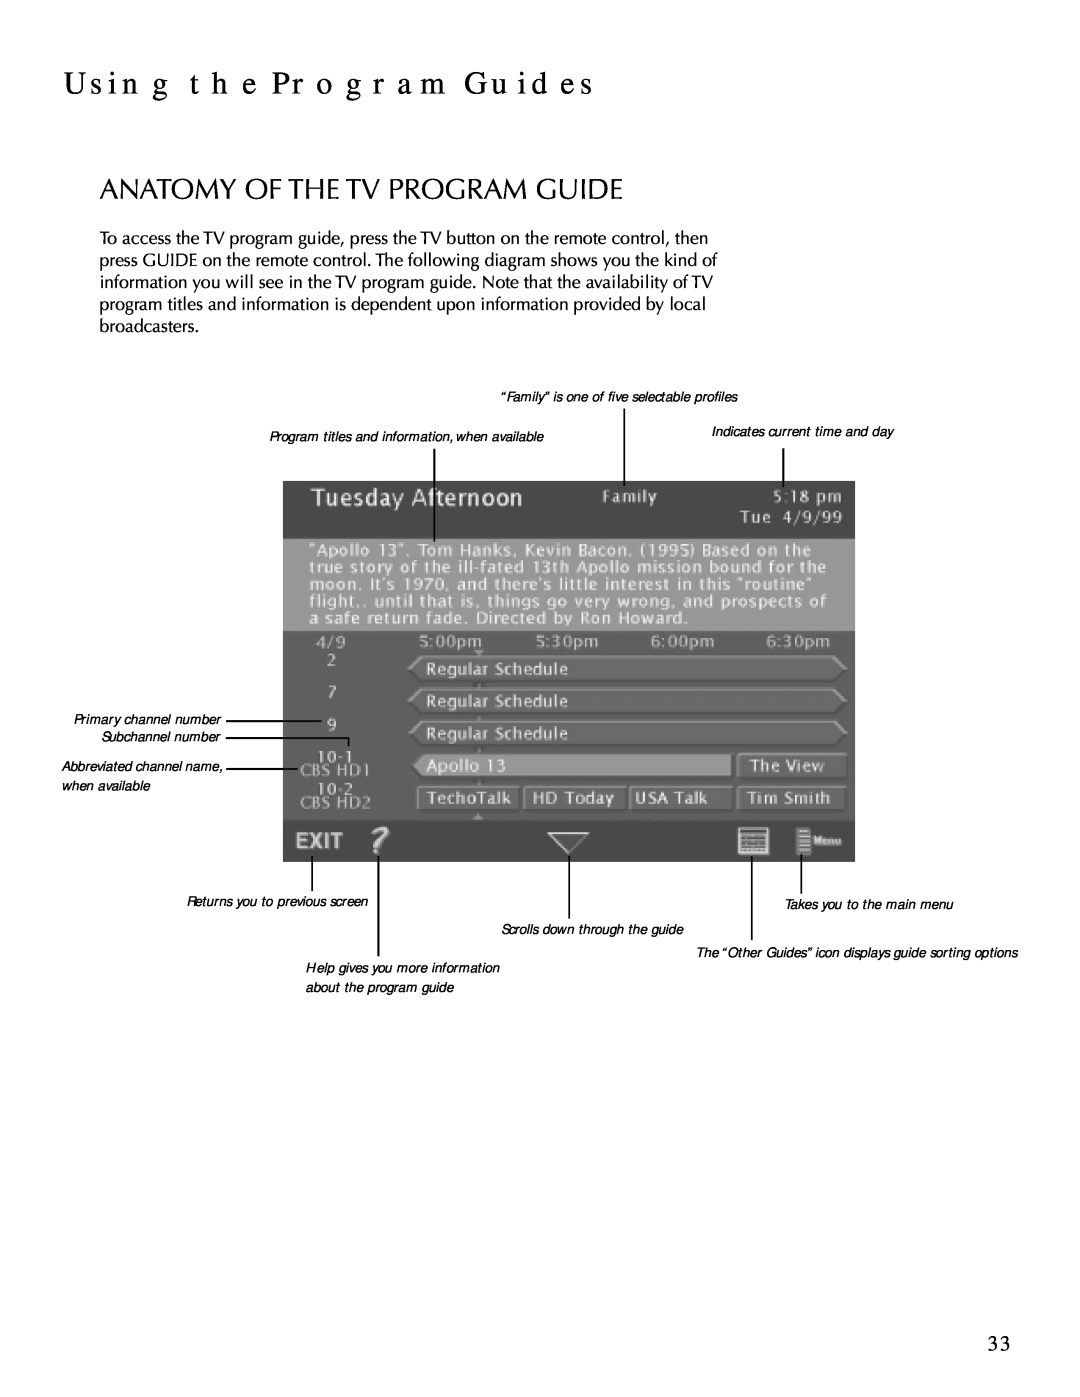 DirecTV HDTV user manual Anatomy Of The Tv Program Guide, Using The Program Guides 